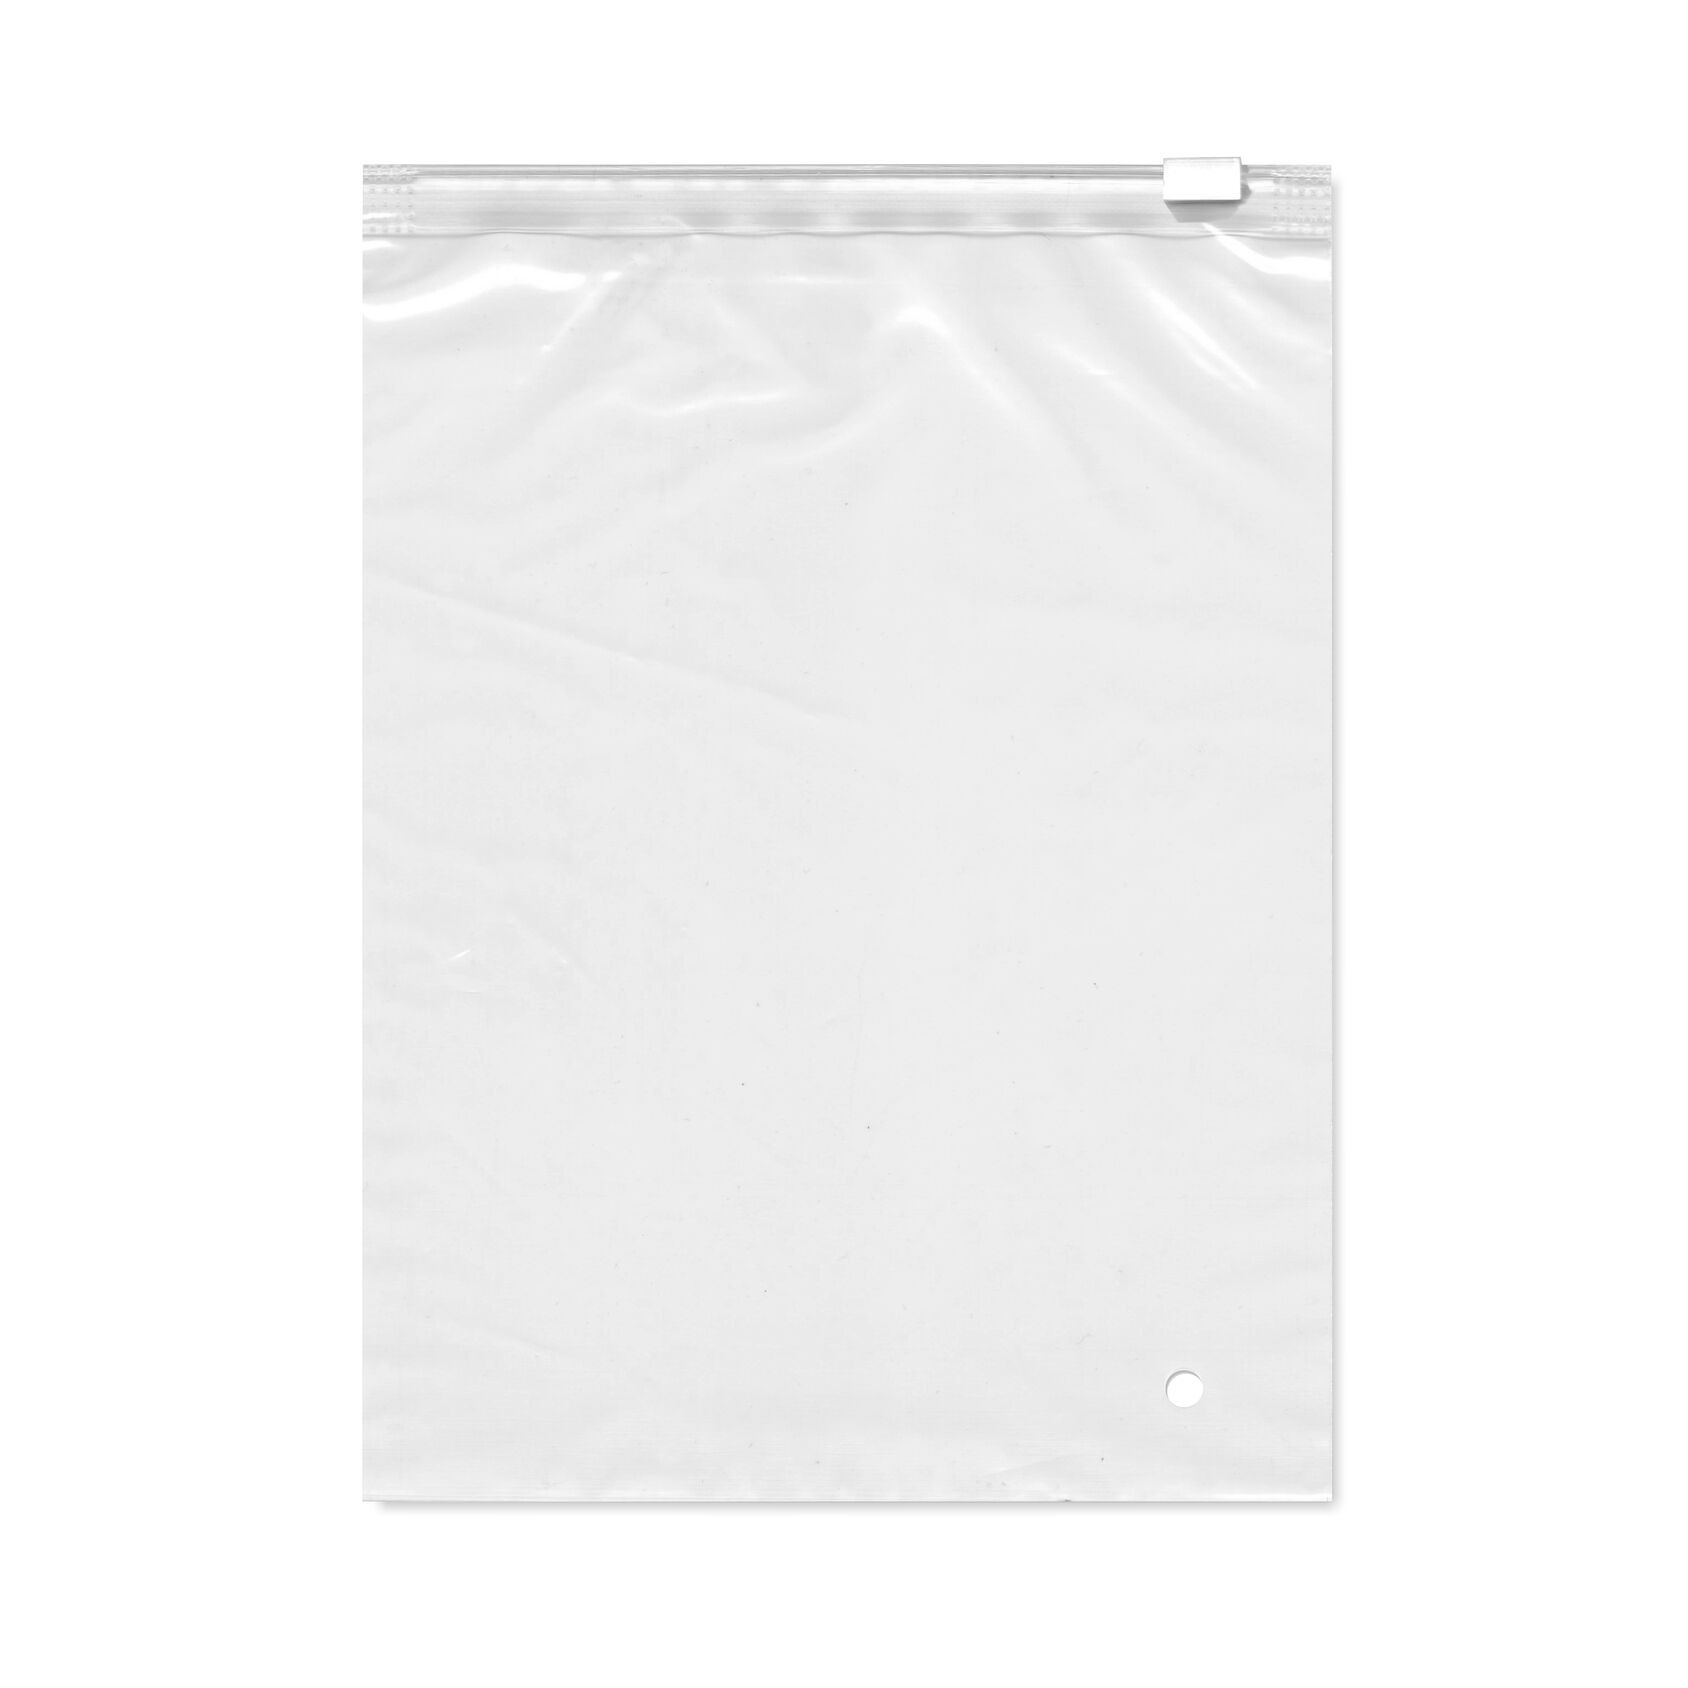 Зип-Лок пакет с бегунком (пакет слайдер) 40х50 см, 60 мкм, прозрачный